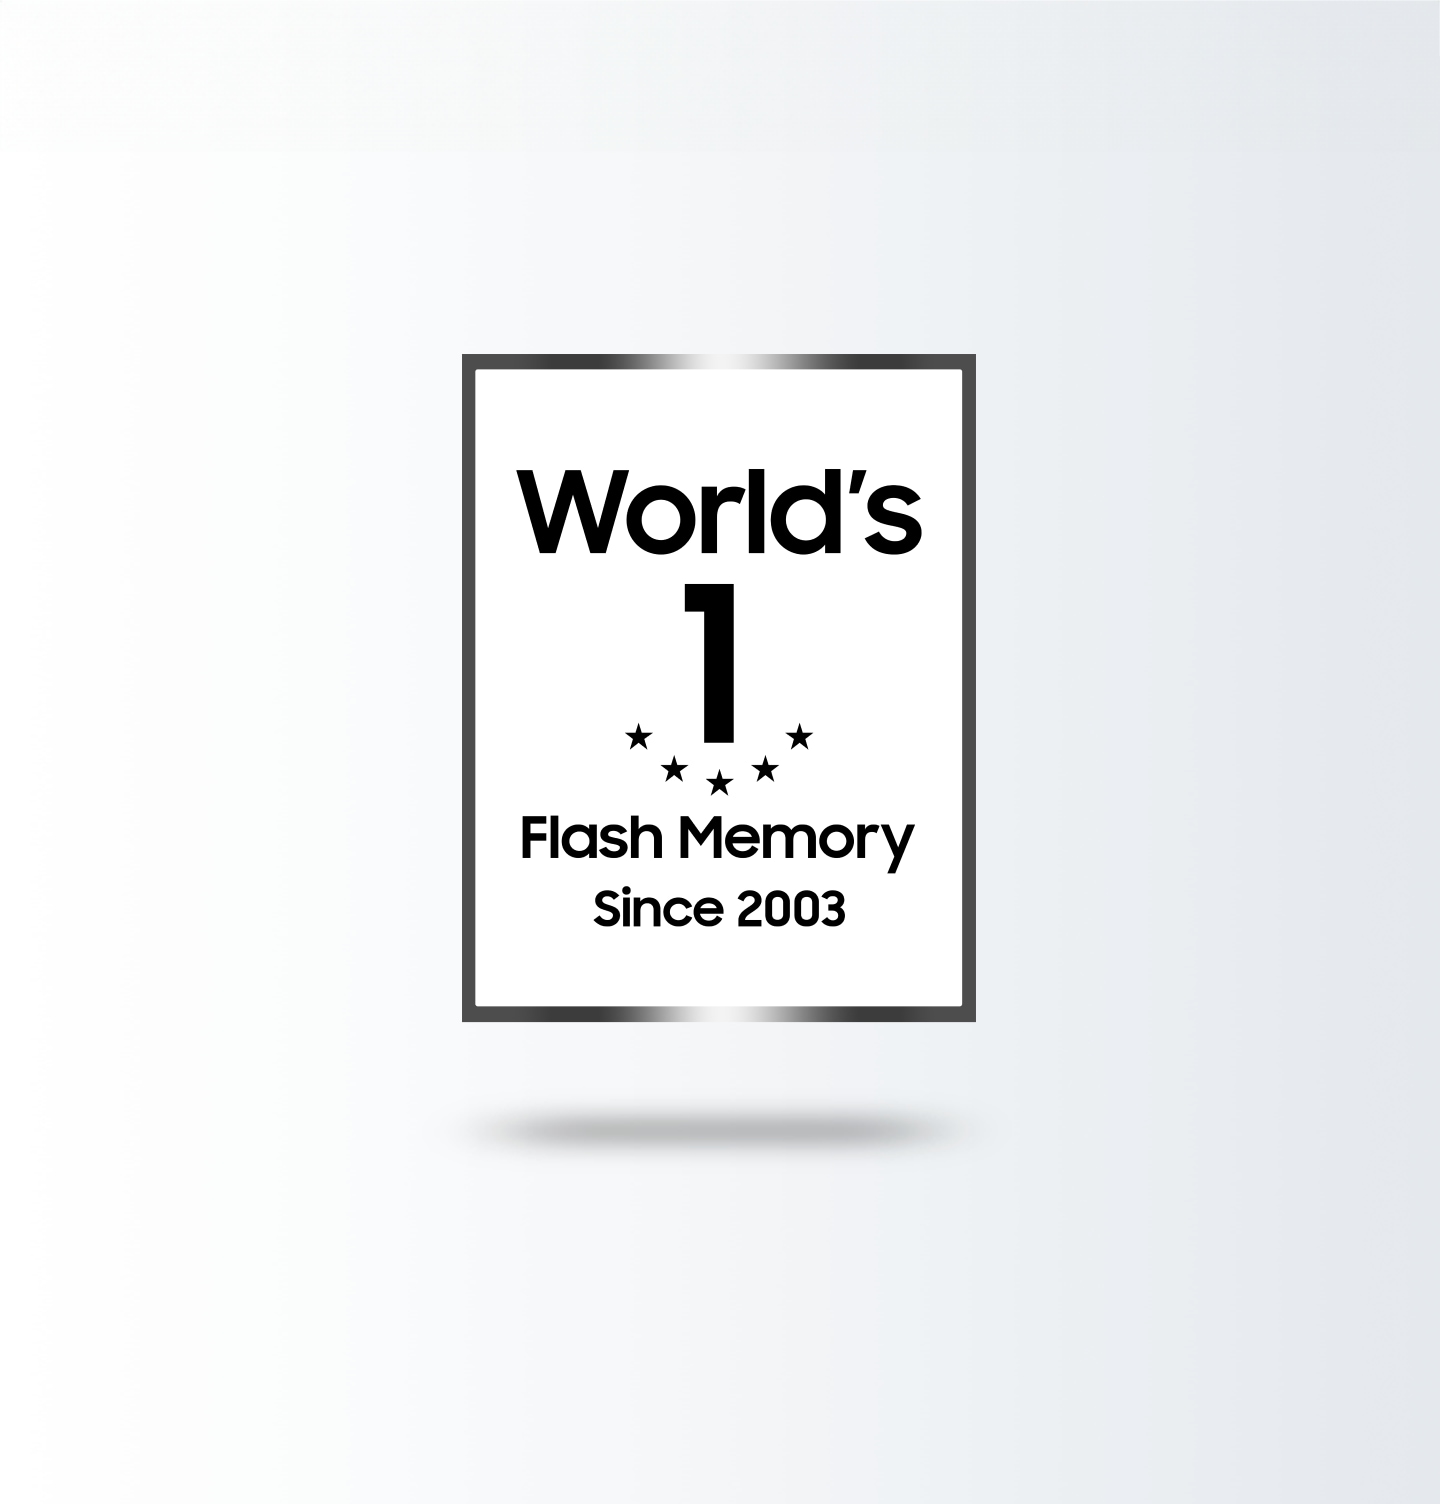 World's No.1 Flash Memory